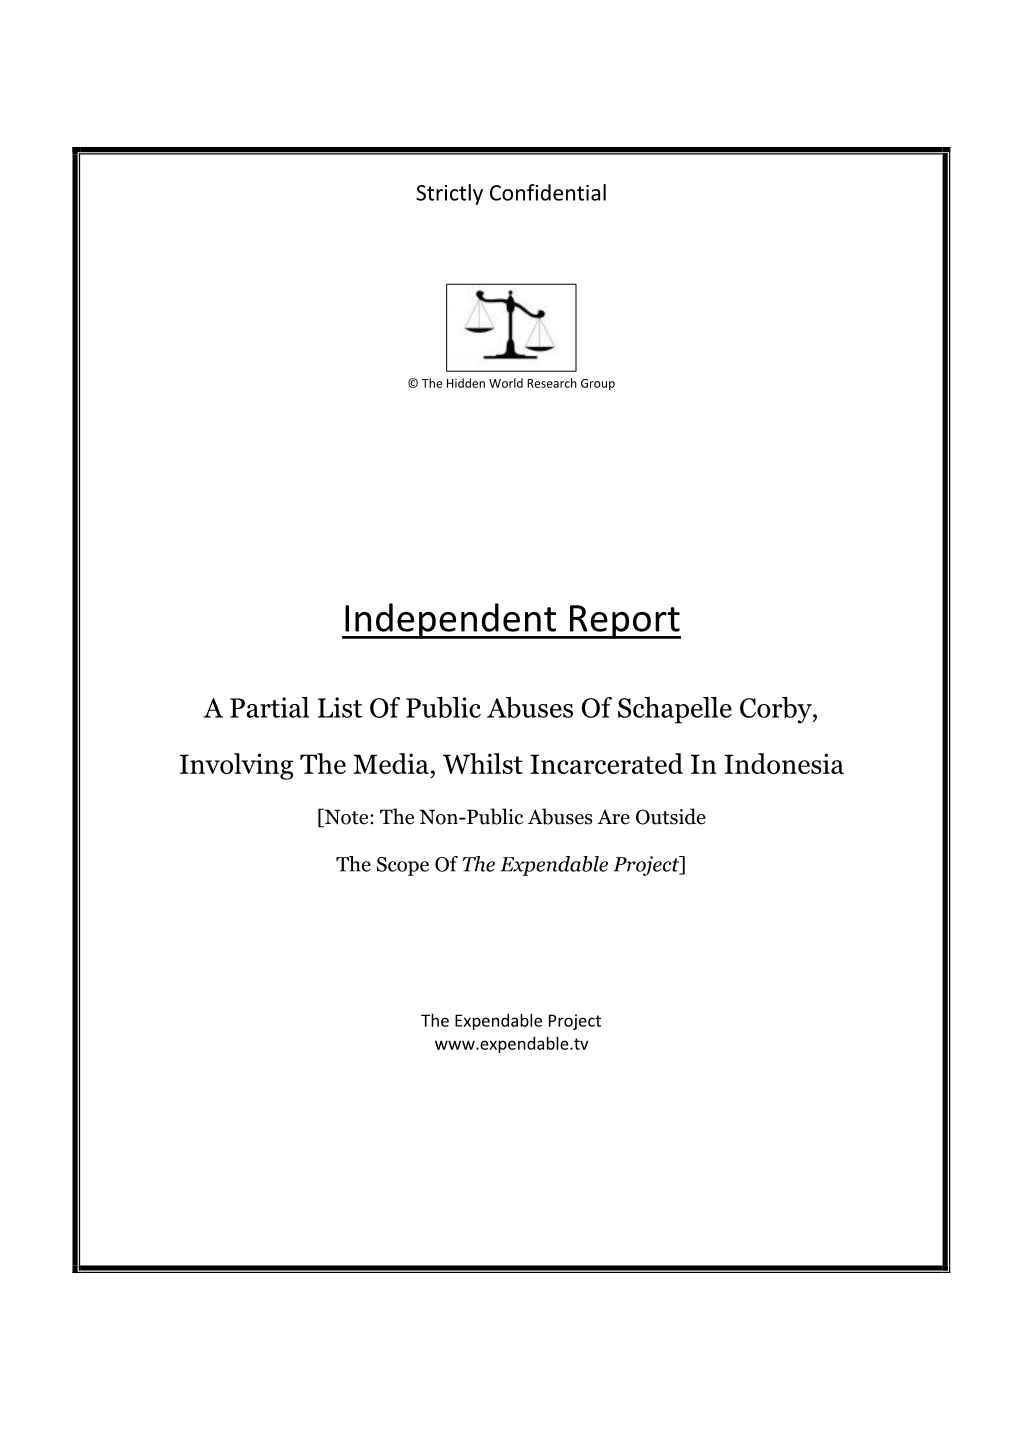 Independent Report